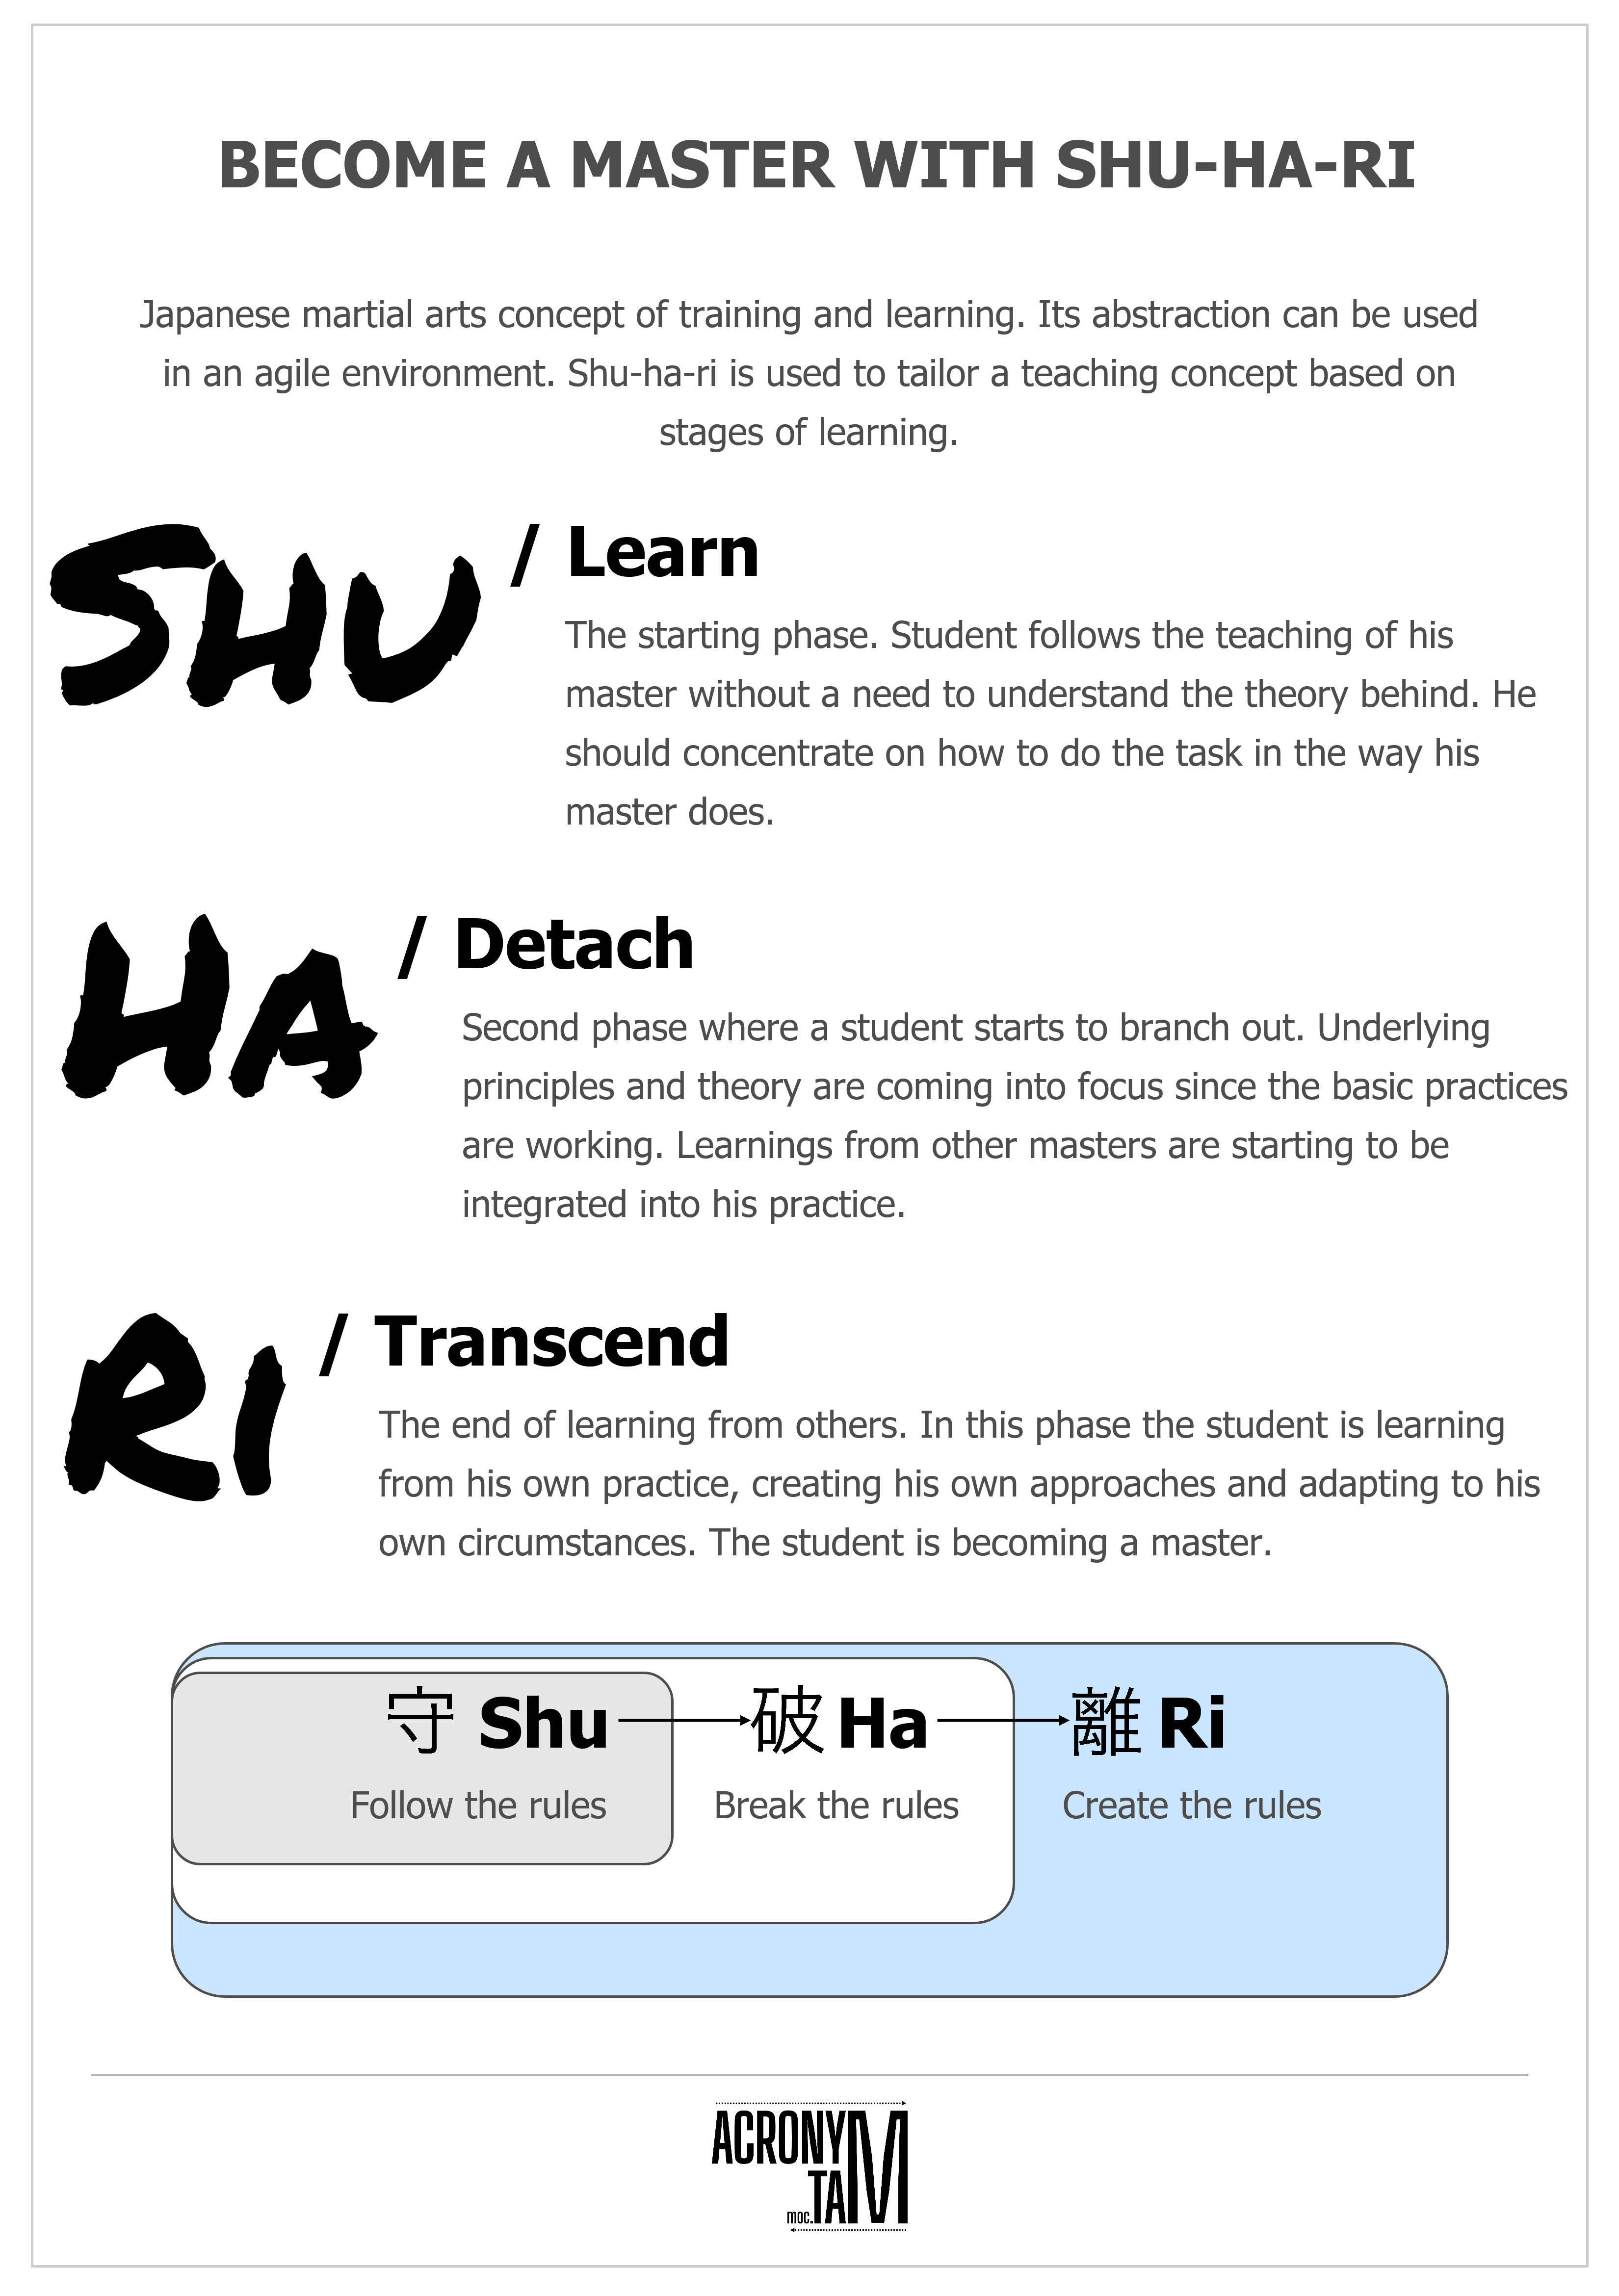 Shu ha ri learning/ training phases.